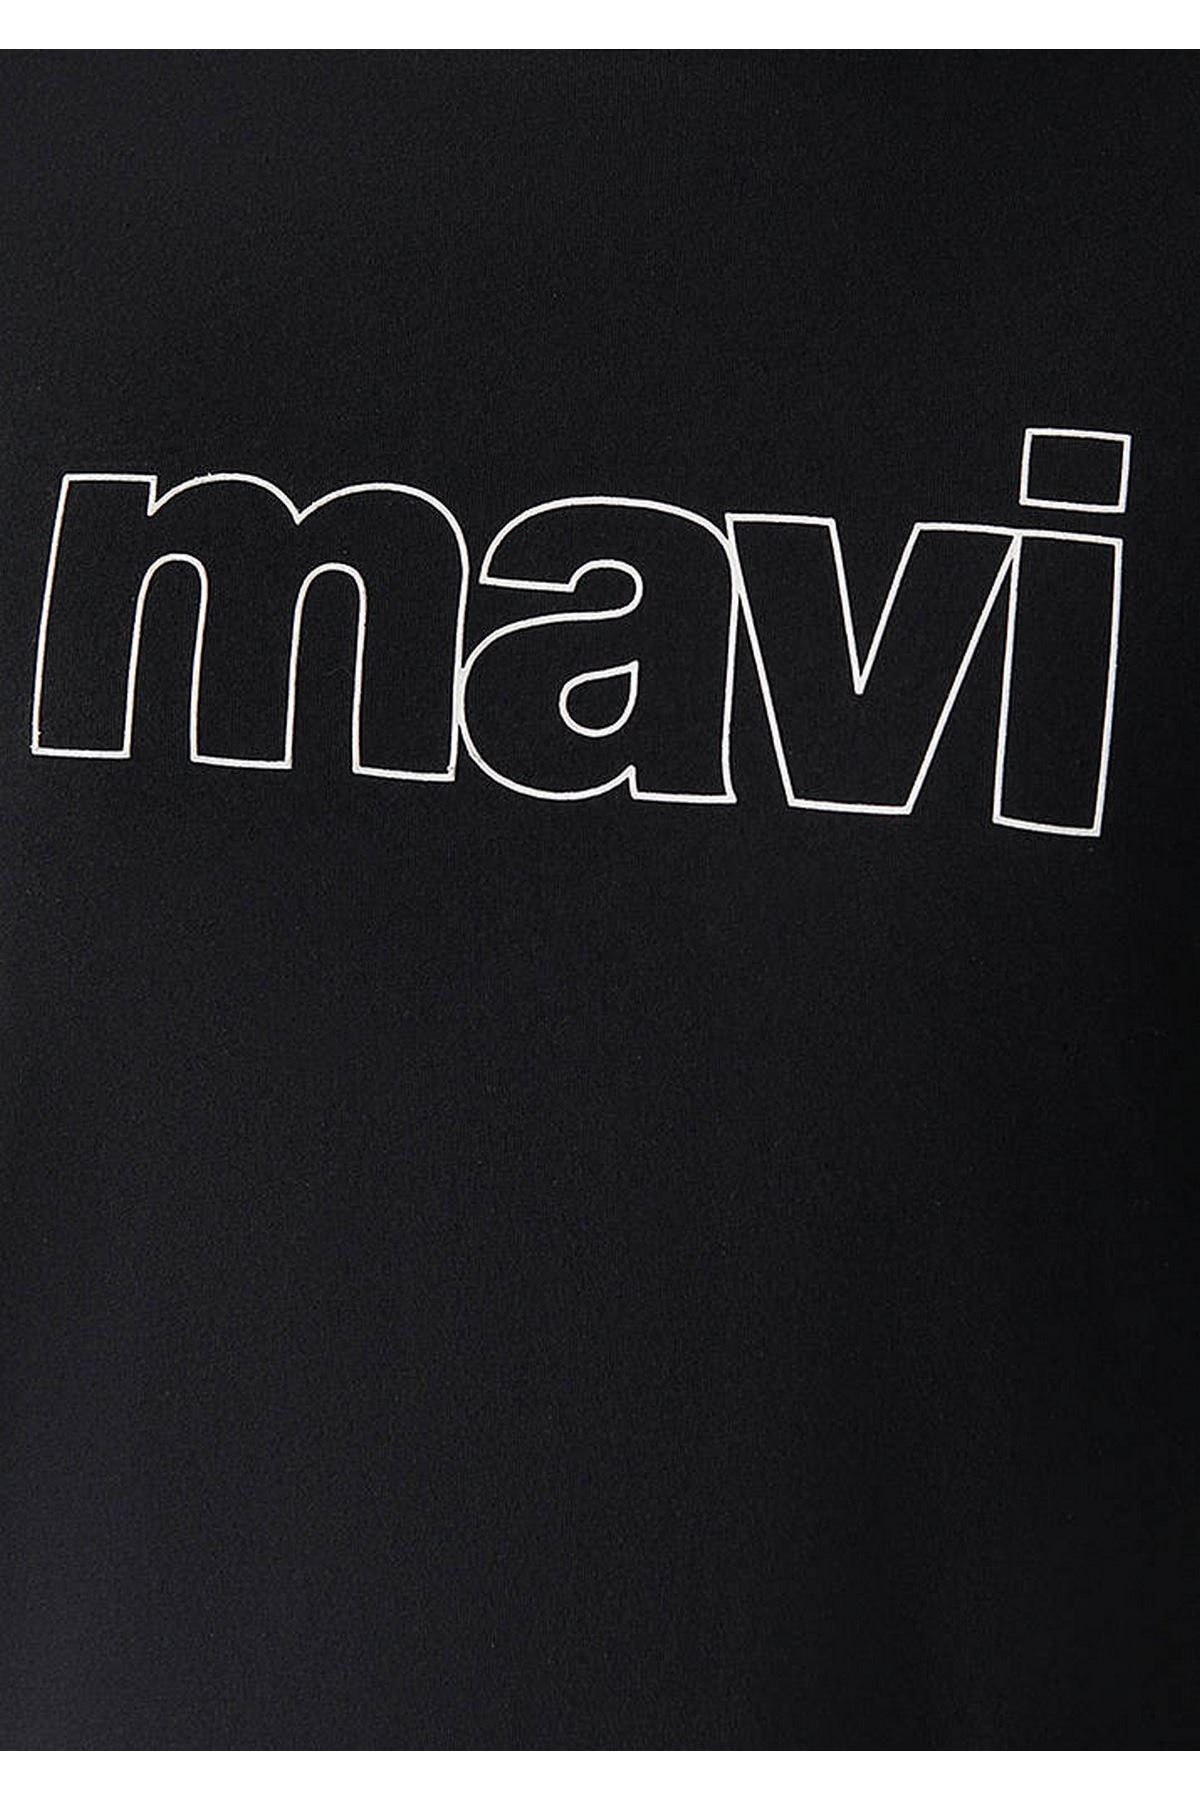 Mavi Logo Erkek Siyah Tişört - M065781-900